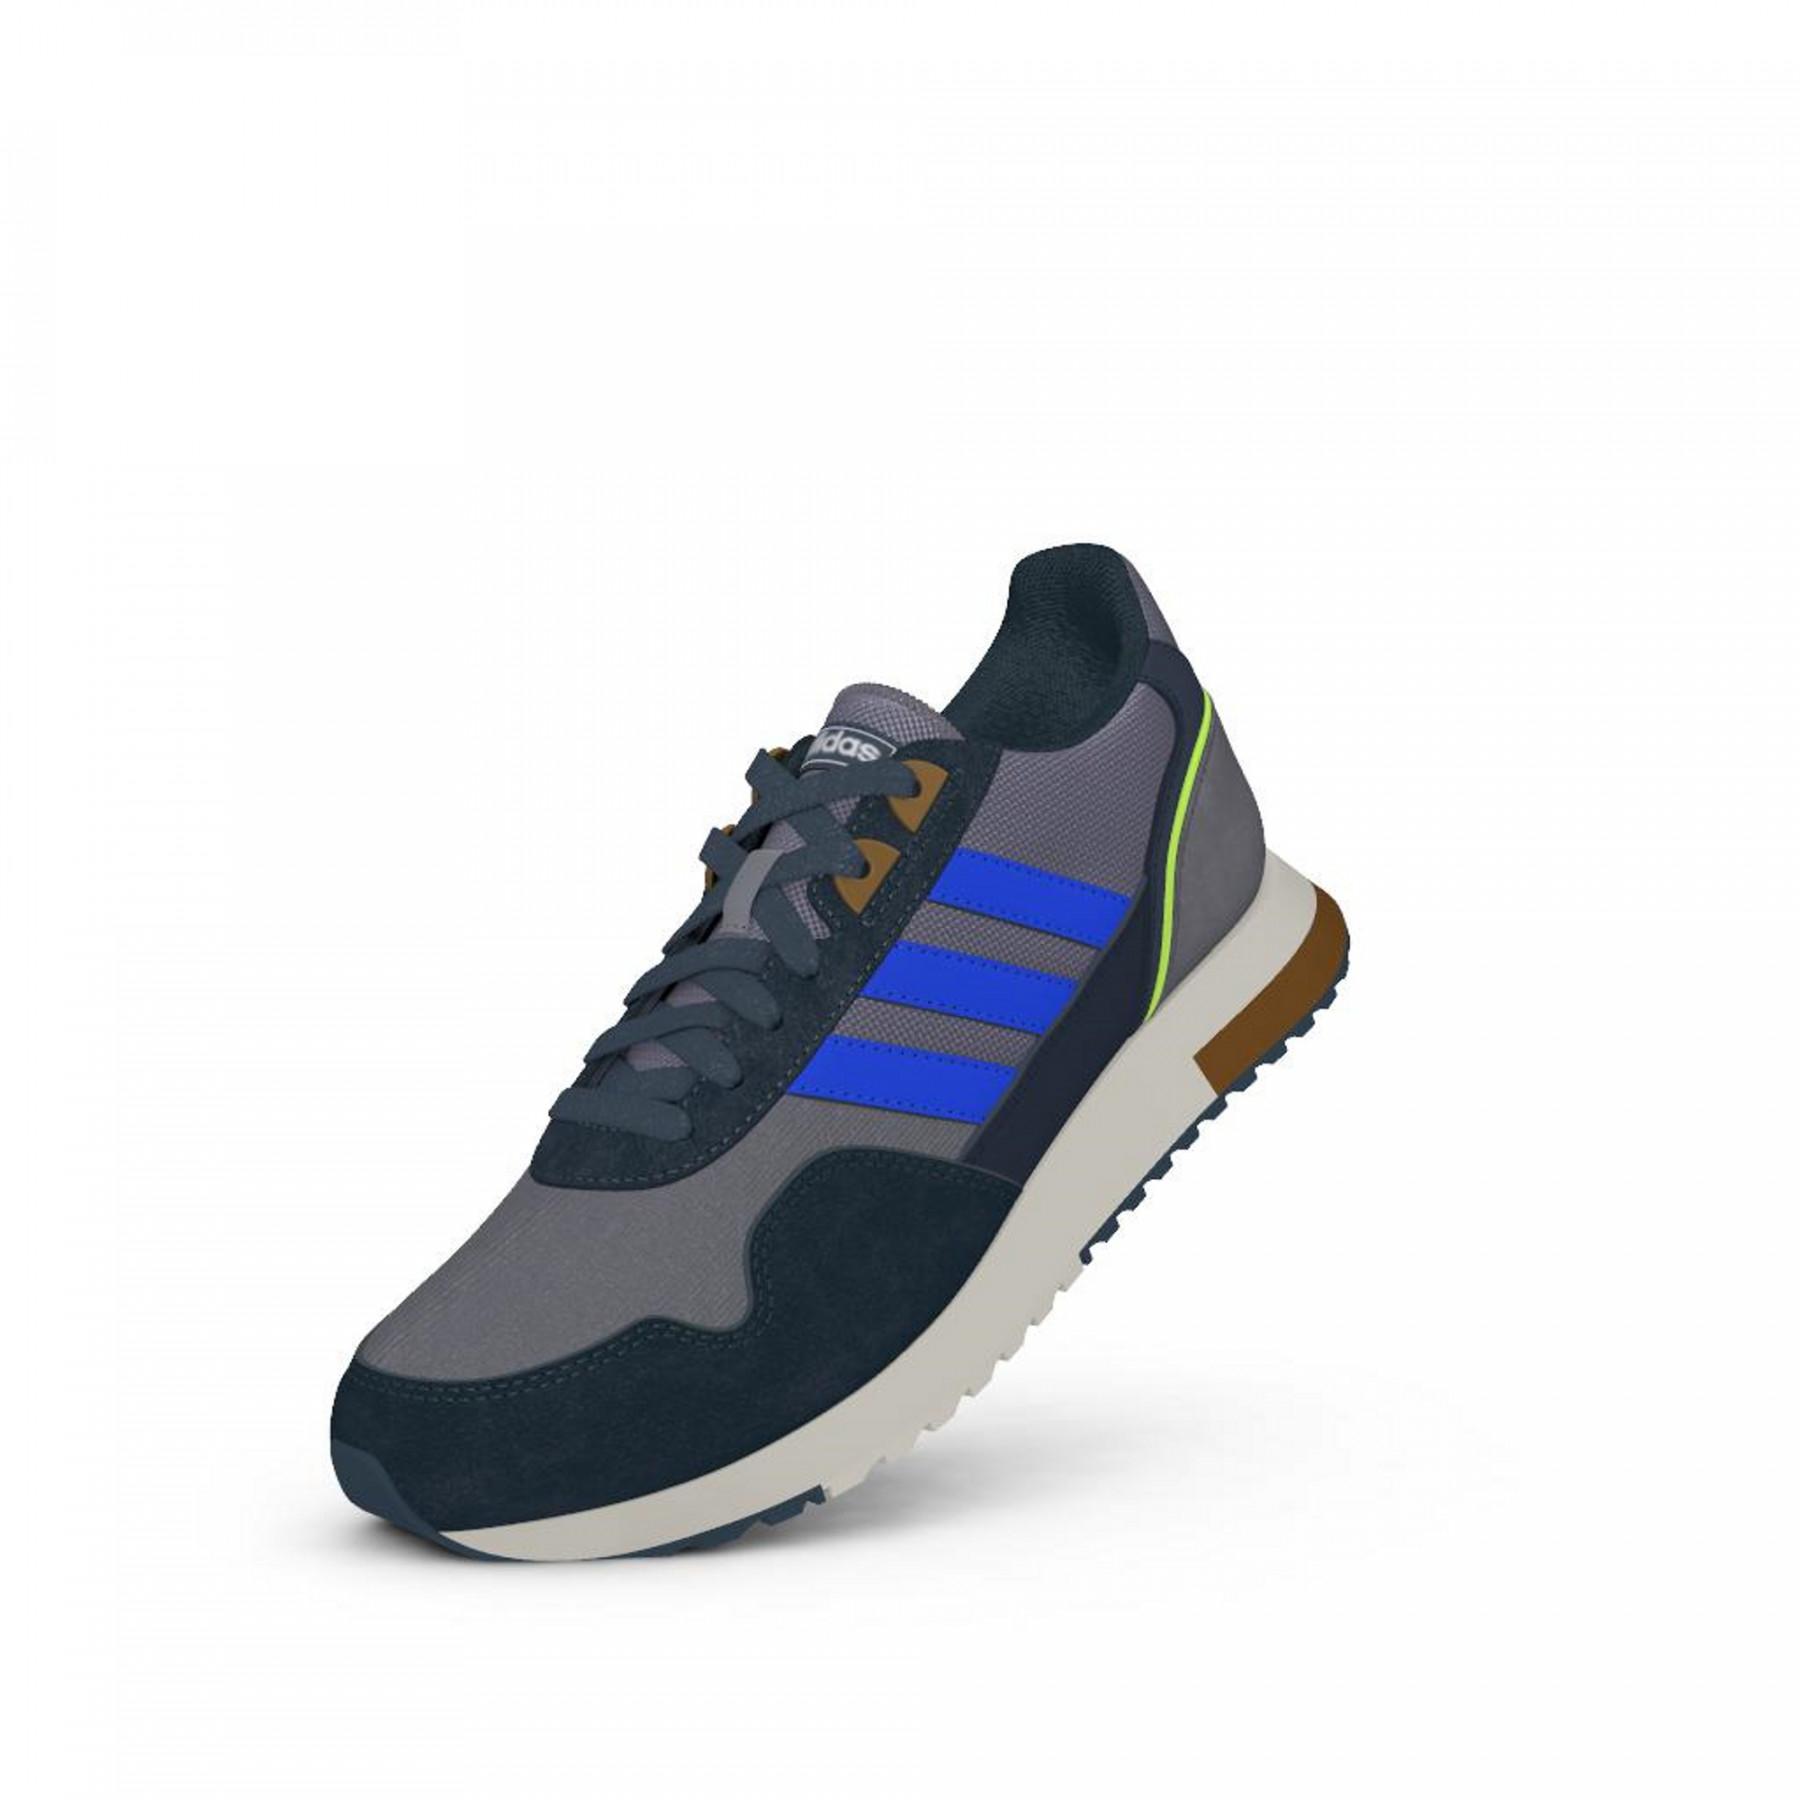 Shoes adidas 8K 2020